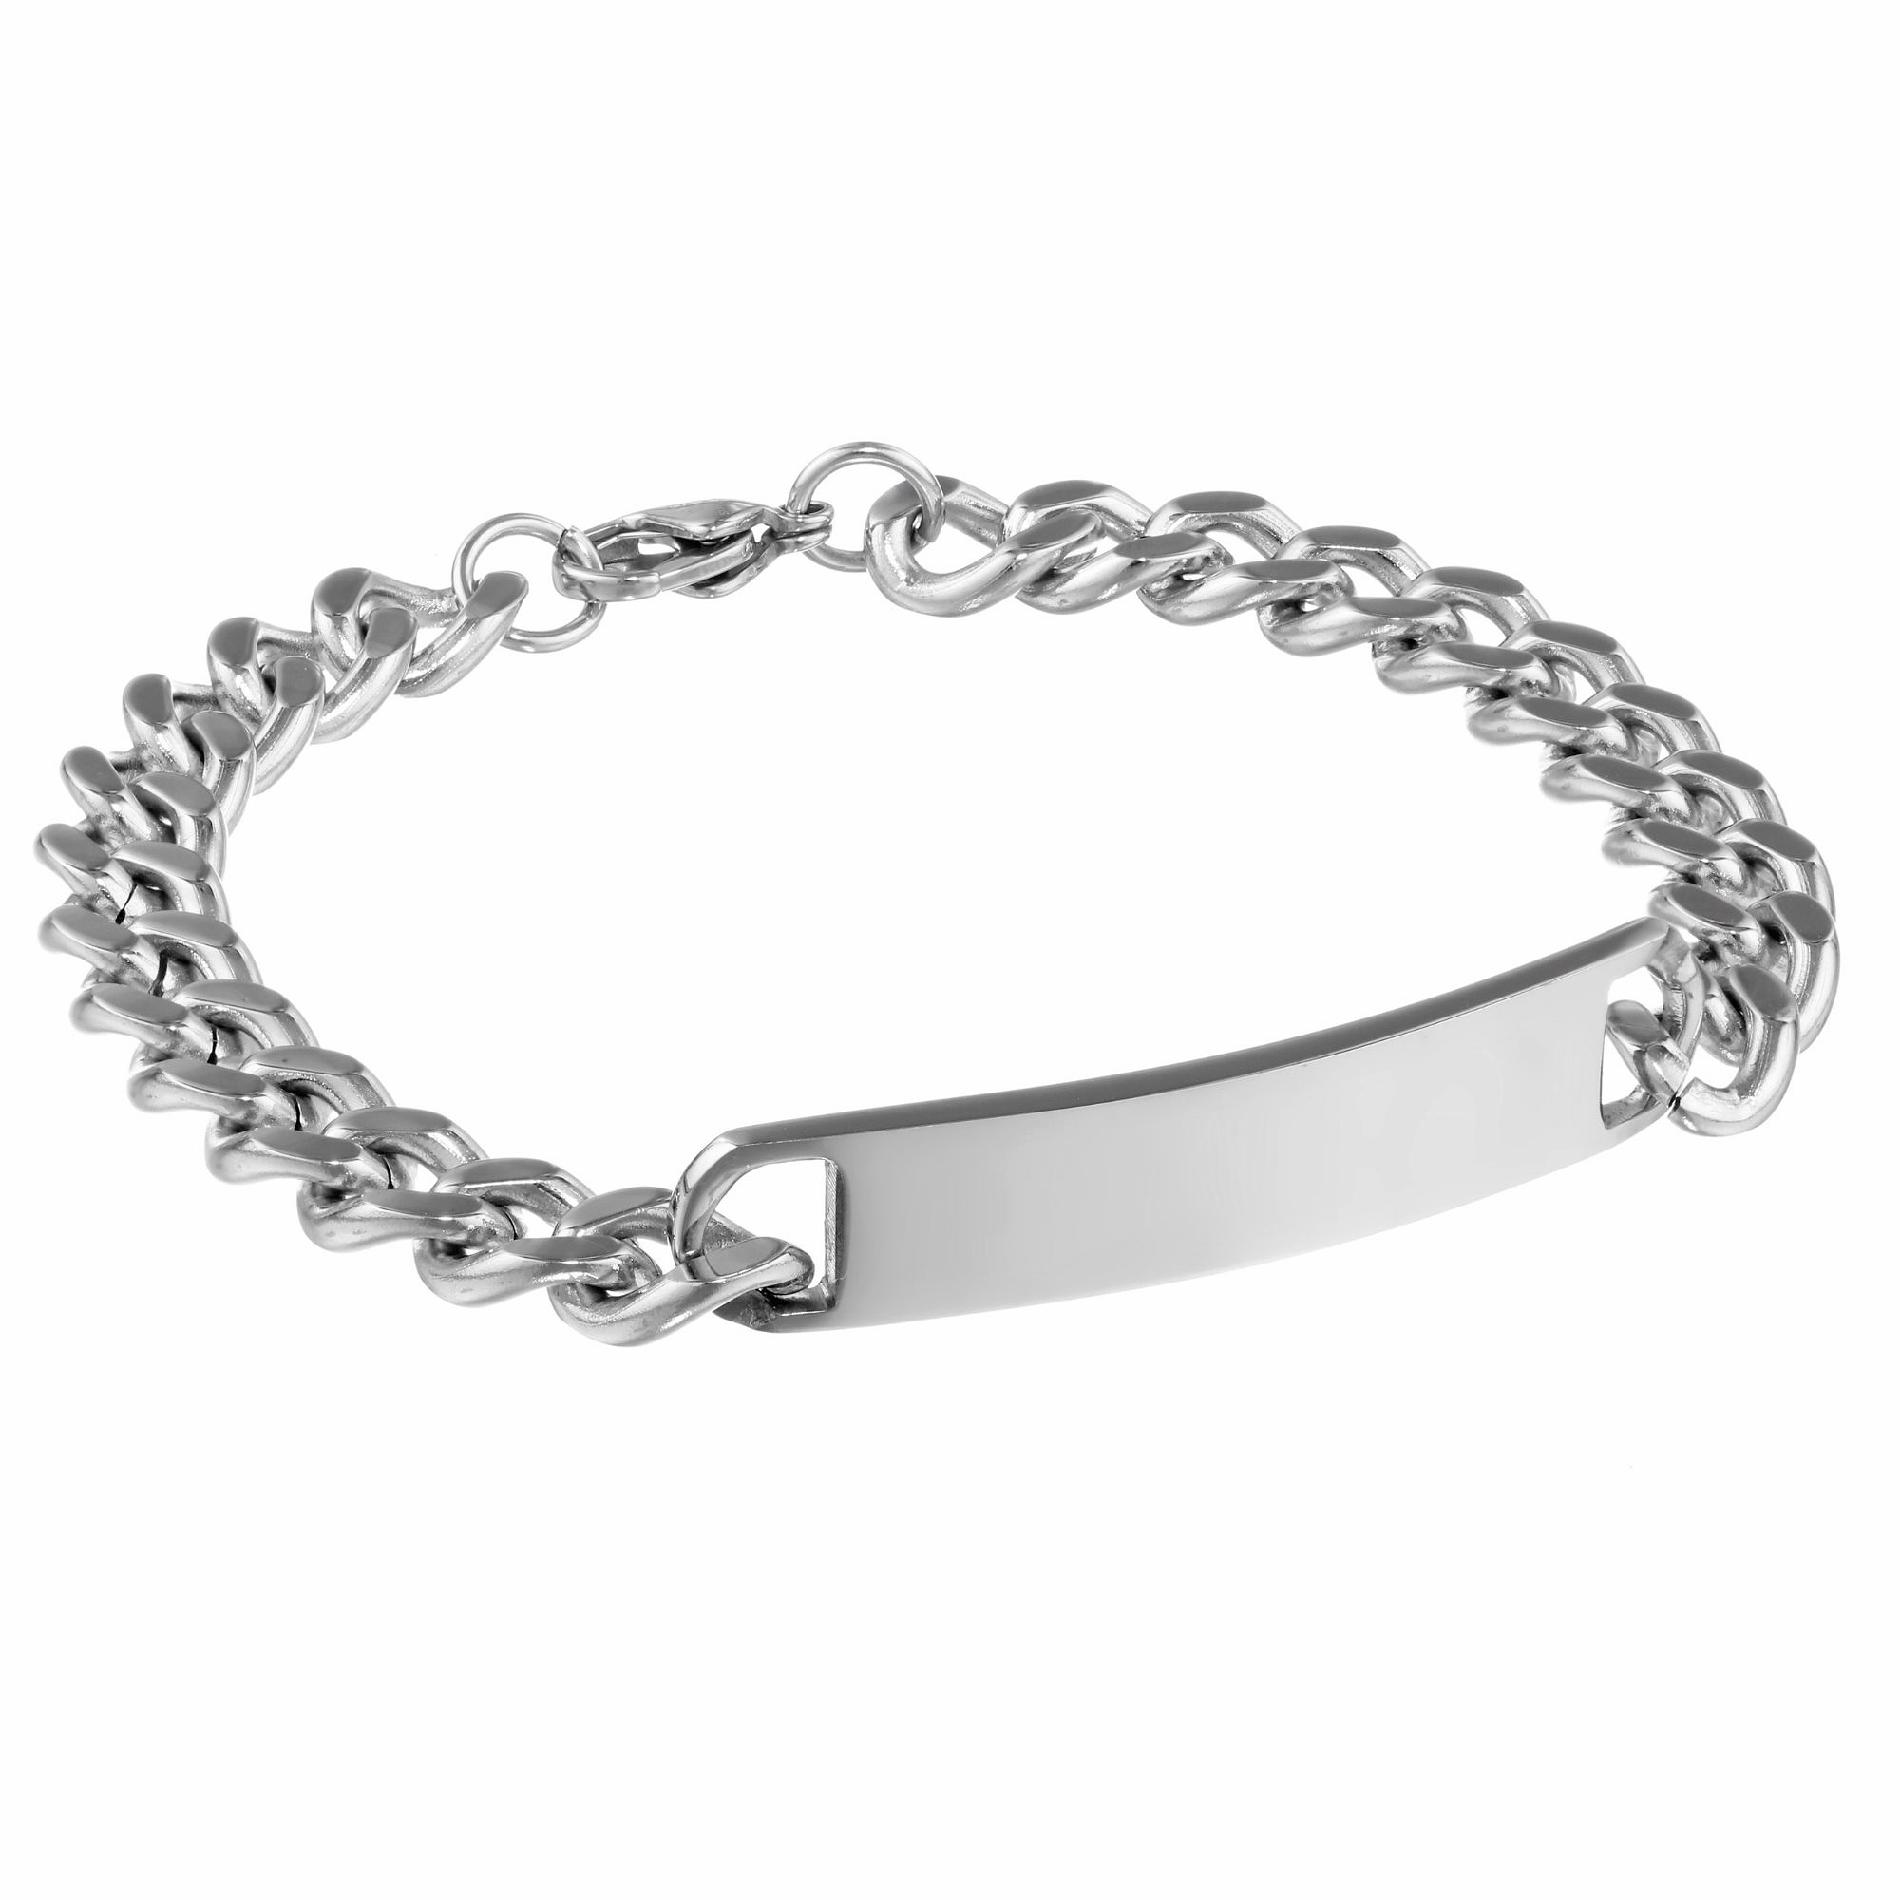 Curb Identification Bracelet in Stainless Steel - 10mm